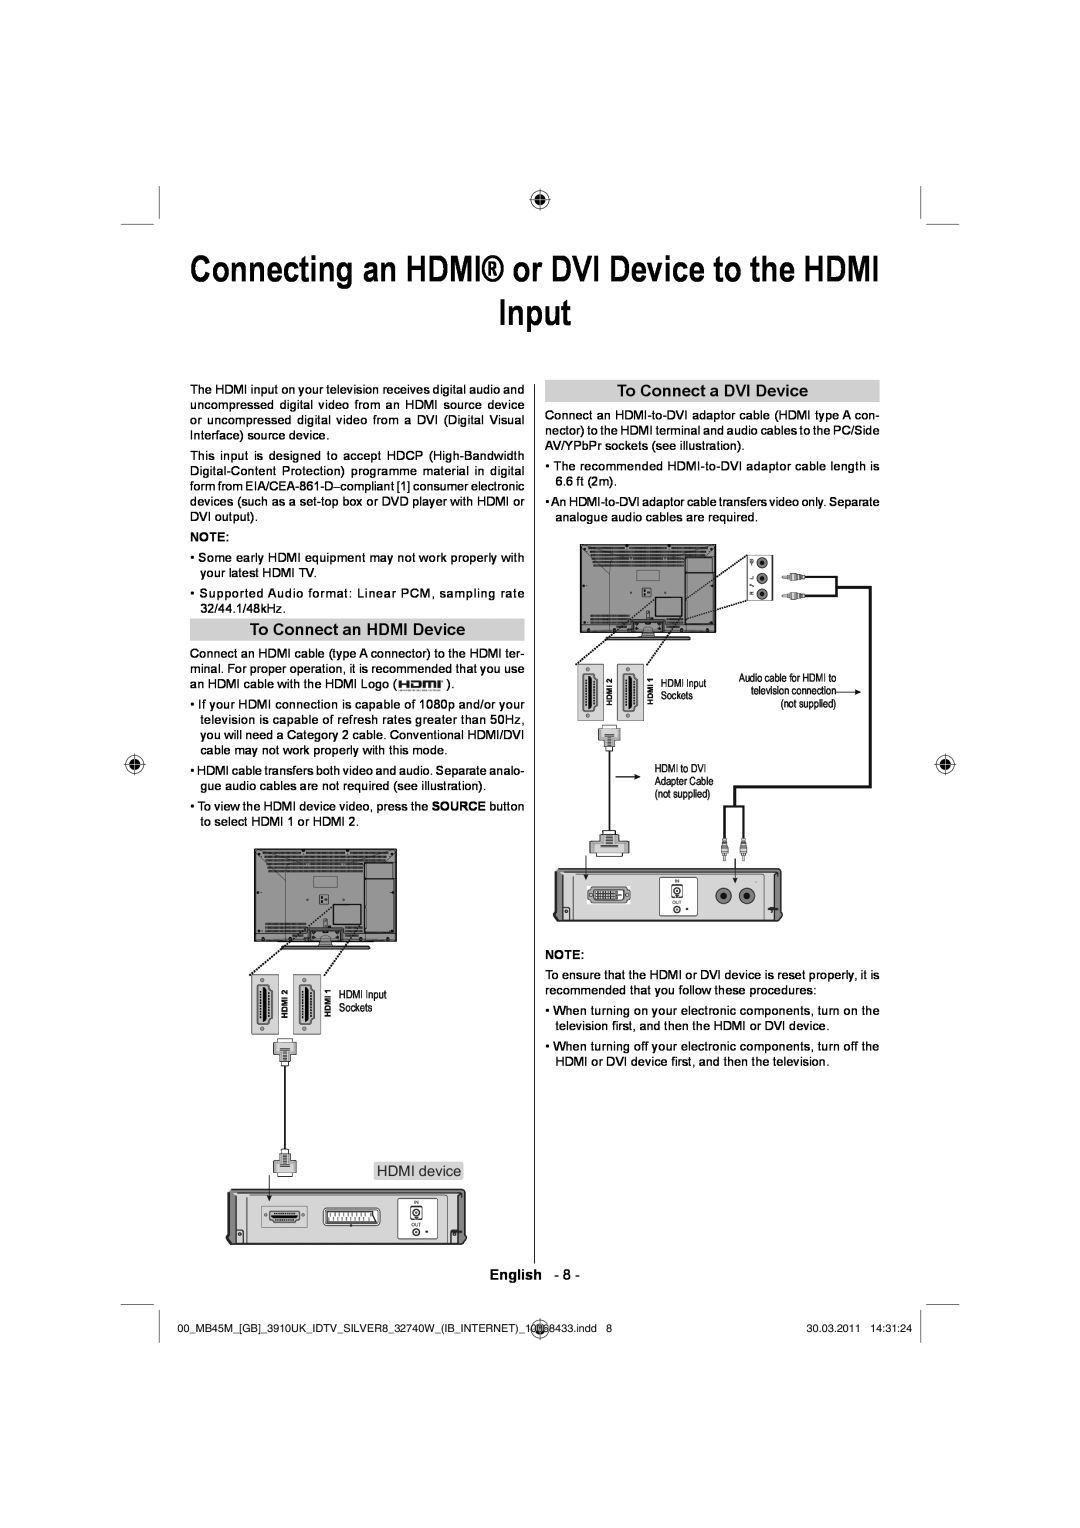 Toshiba 32BV500B Connecting an HDMI or DVI Device to the HDMI Input, To Connect an HDMI Device, To Connect a DVI Device 